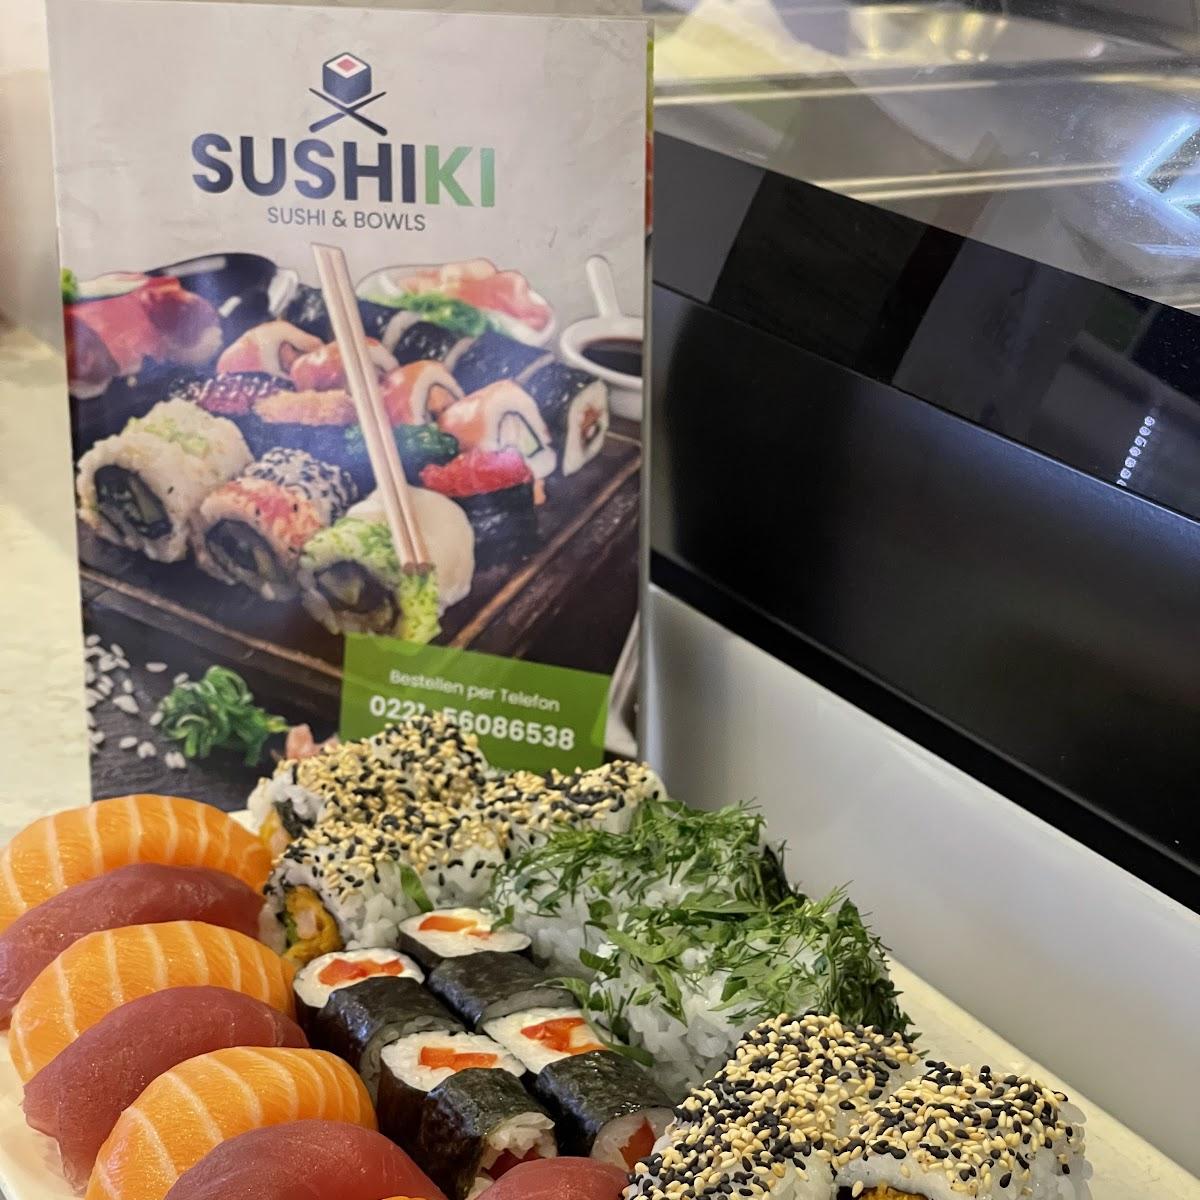 Restaurant "Sushiki" in Köln